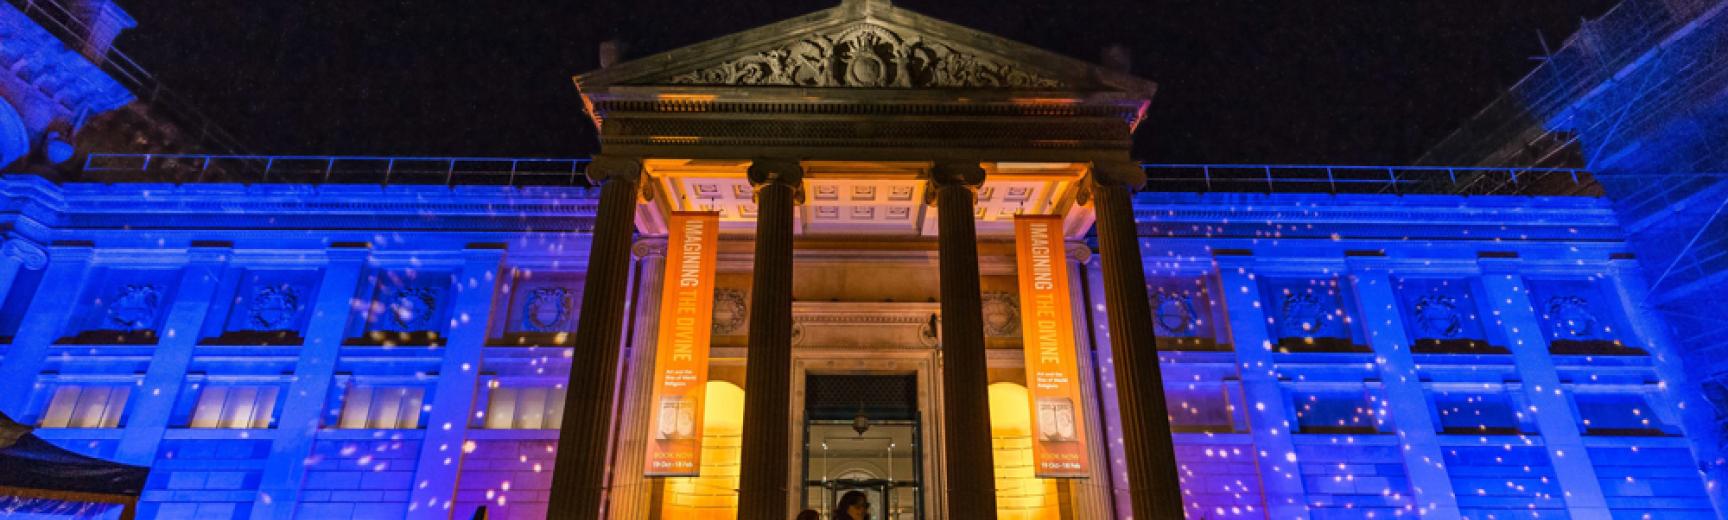 Ashmolean Museum at Night